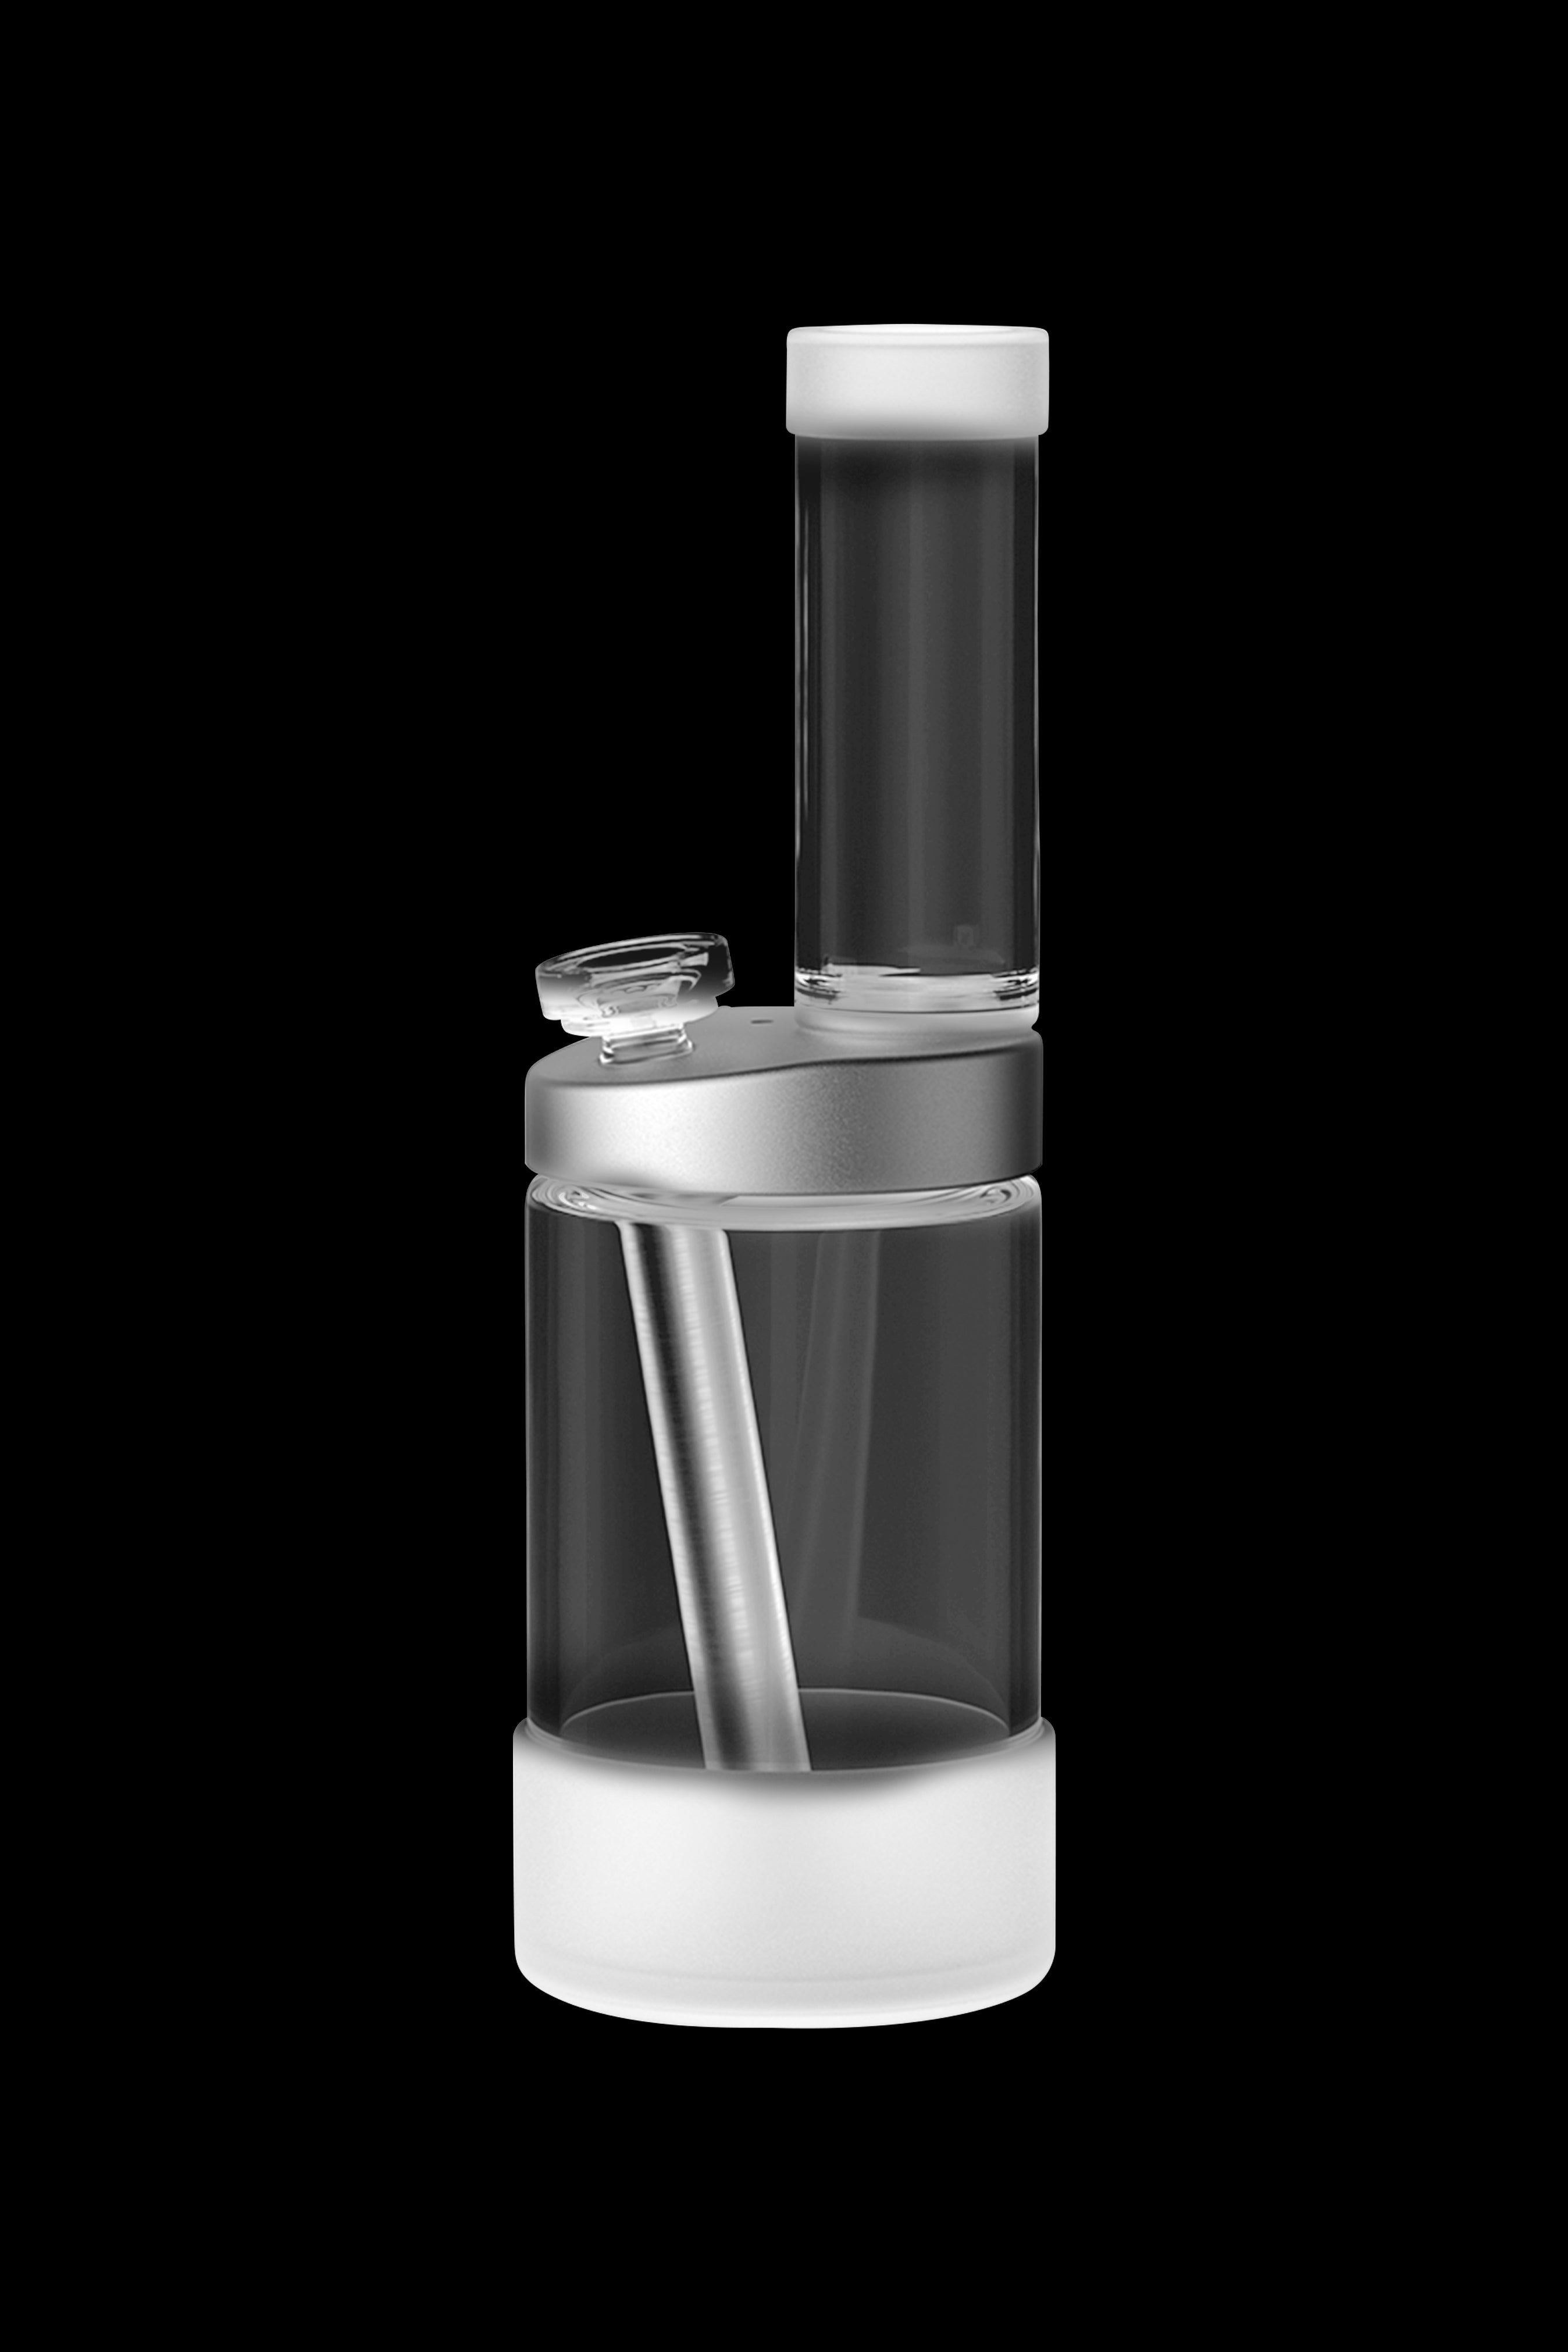 Image of Honest Capsule Water Pipe